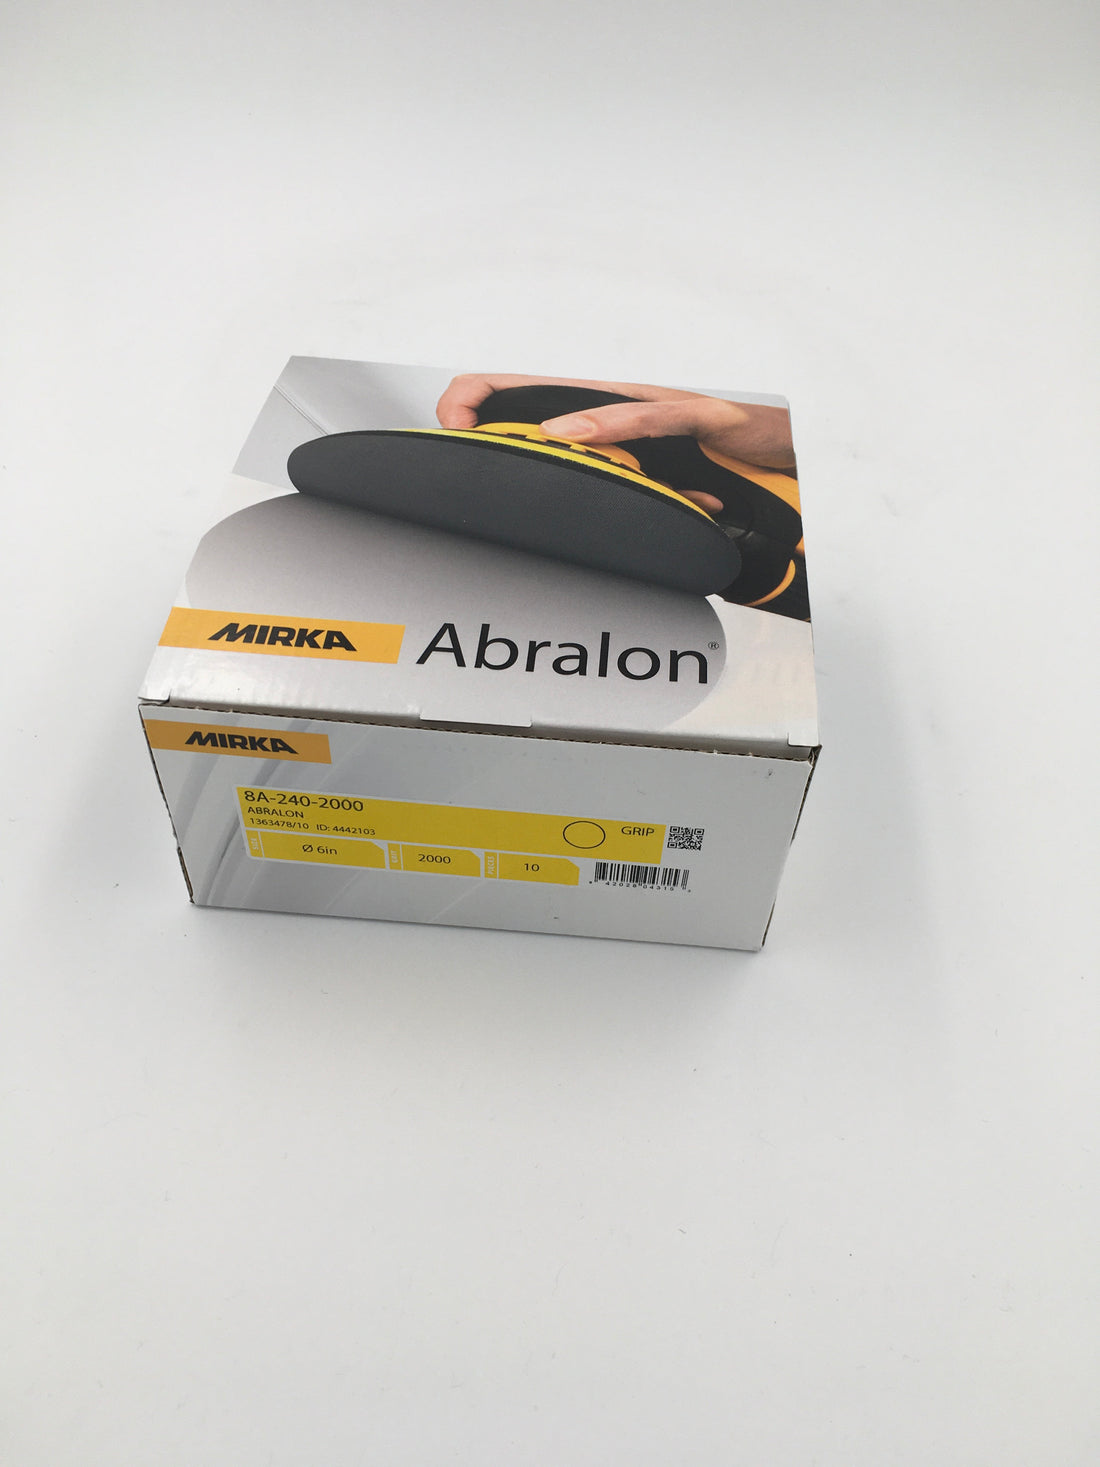 Mirka Abralon 6'in. Foam Grip Disc 2000 Grit Qty 10 Box